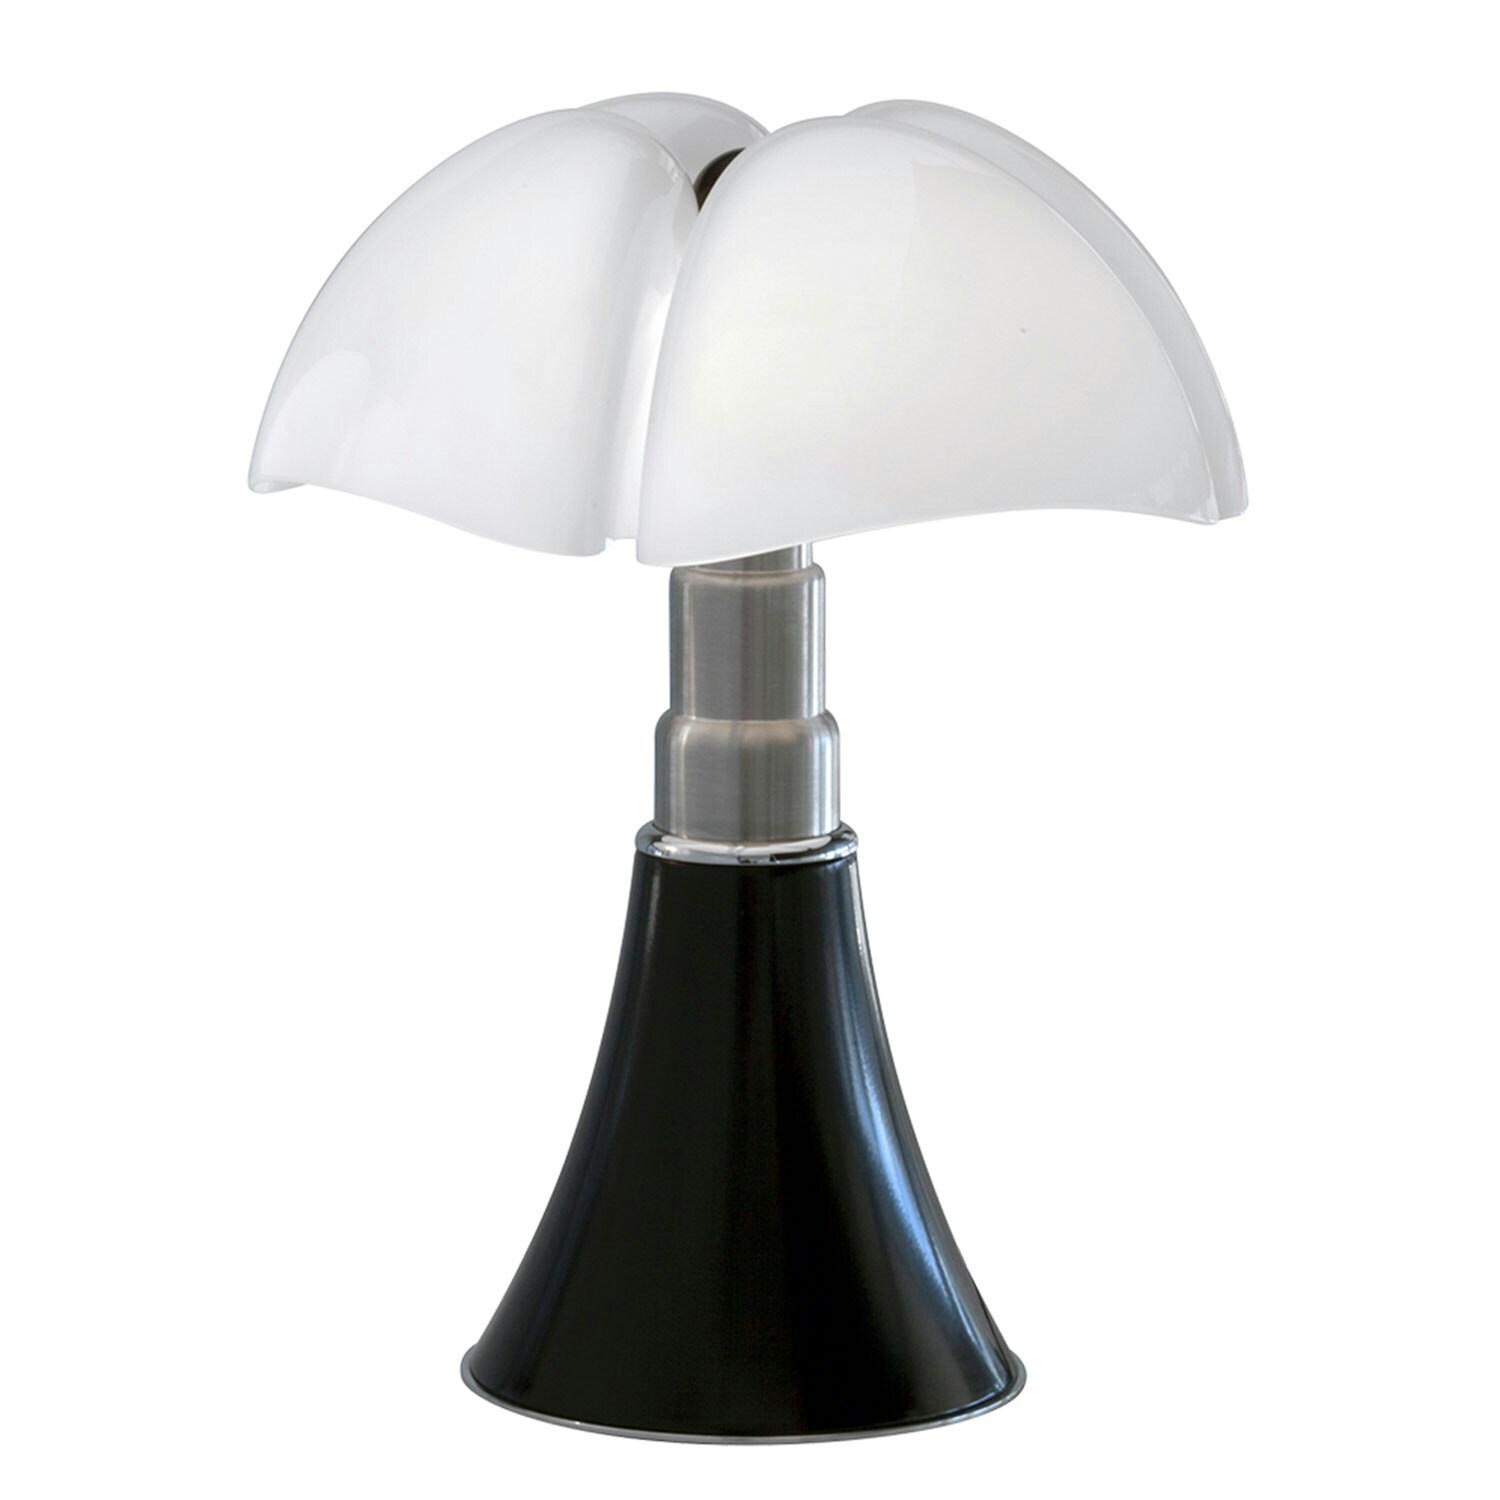 https://royaldesign.com/image/2/martinelli-luce-pipistrello-mini-table-lamp-dimmable-cordless-6